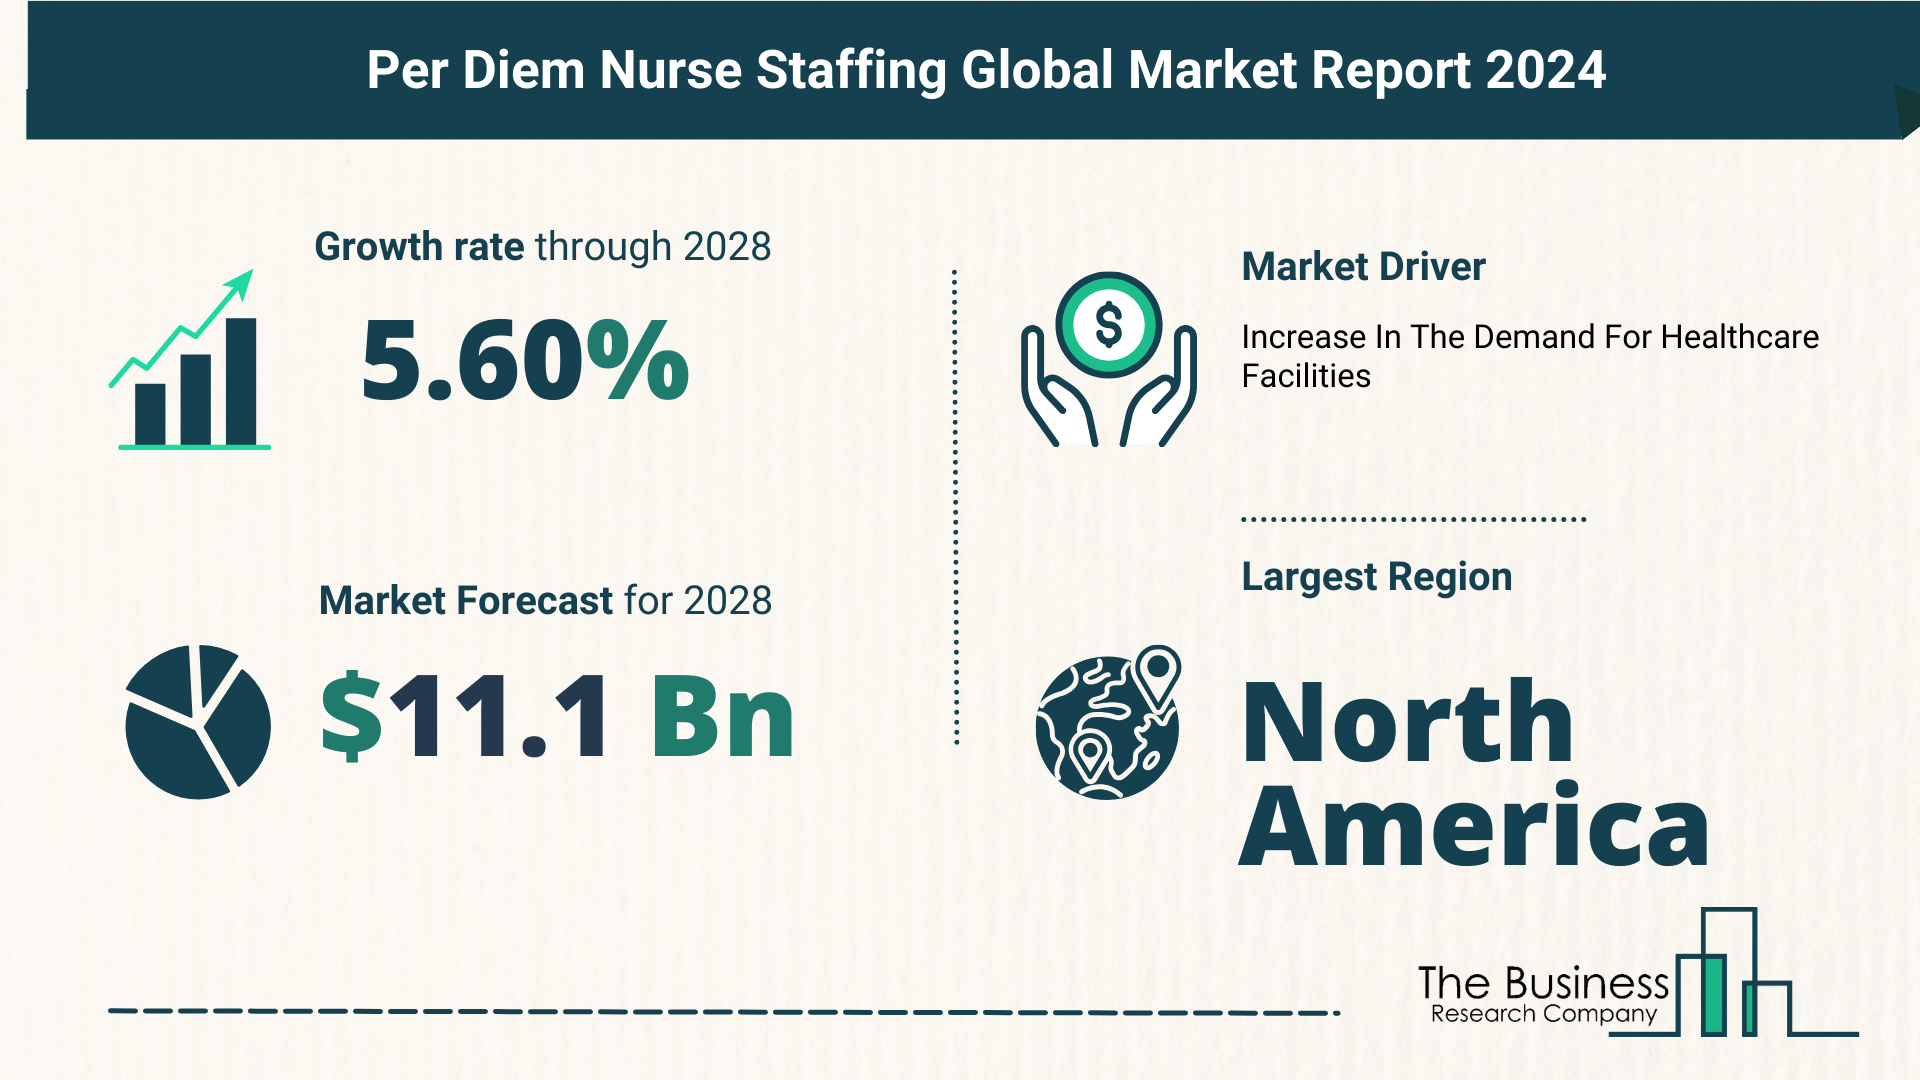 Global Per Diem Nurse Staffing Market